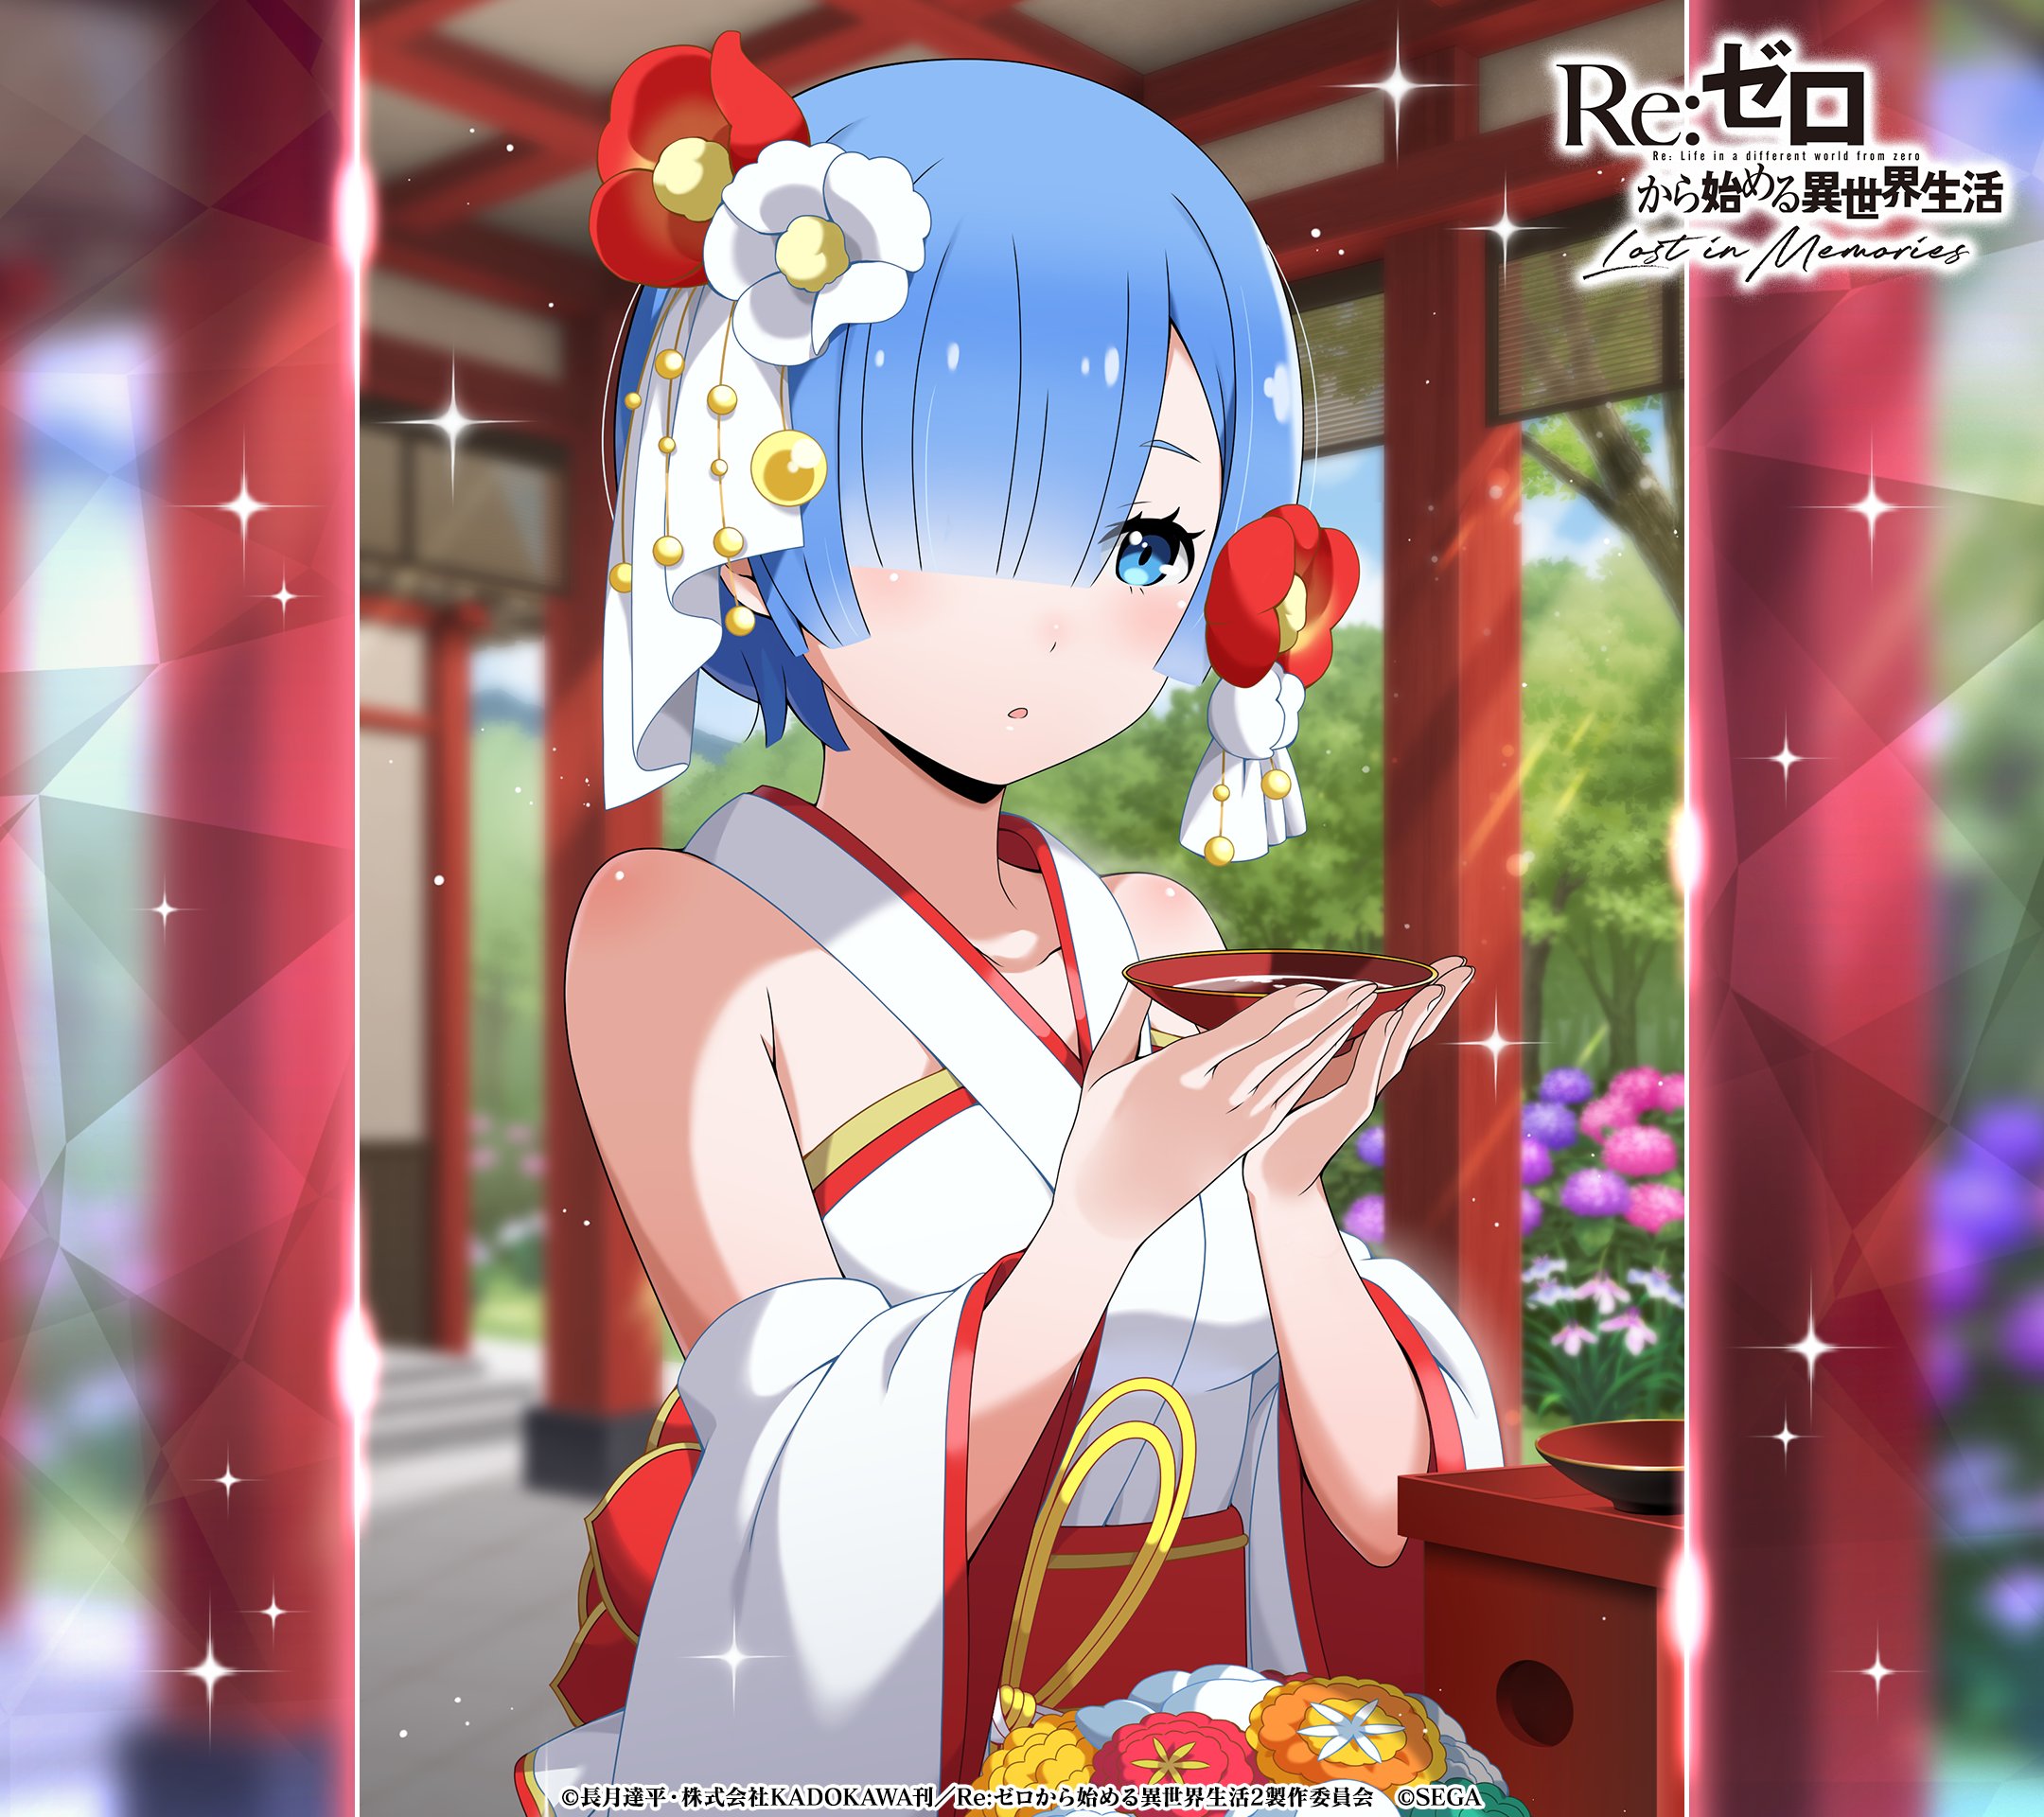 Re ゼロから始める異世界生活 Lost In Memories リゼロス 公式 ルグニカ王国伝令局より 幸せにしてくれますか レム 登場記念 リゼロス オリジナル壁紙をプレゼント 壁紙に設定してレムを見守ろう Rezero 幸せにしてくれ